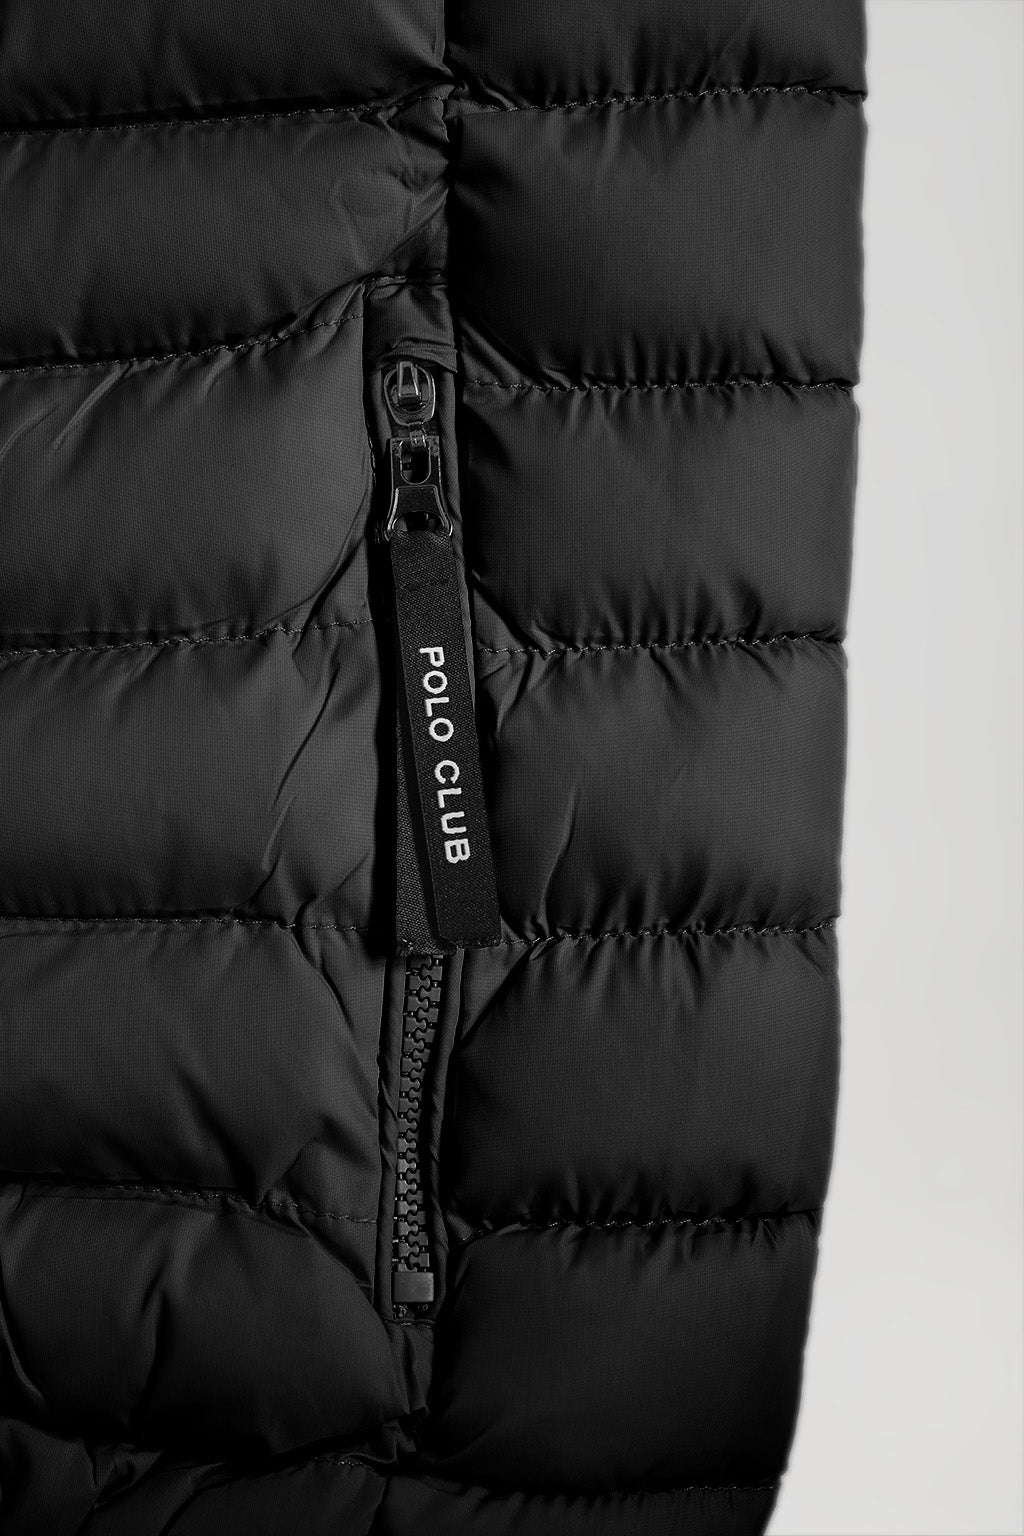 Chaleco gris ultraligero con capucha y detalles Polo Club